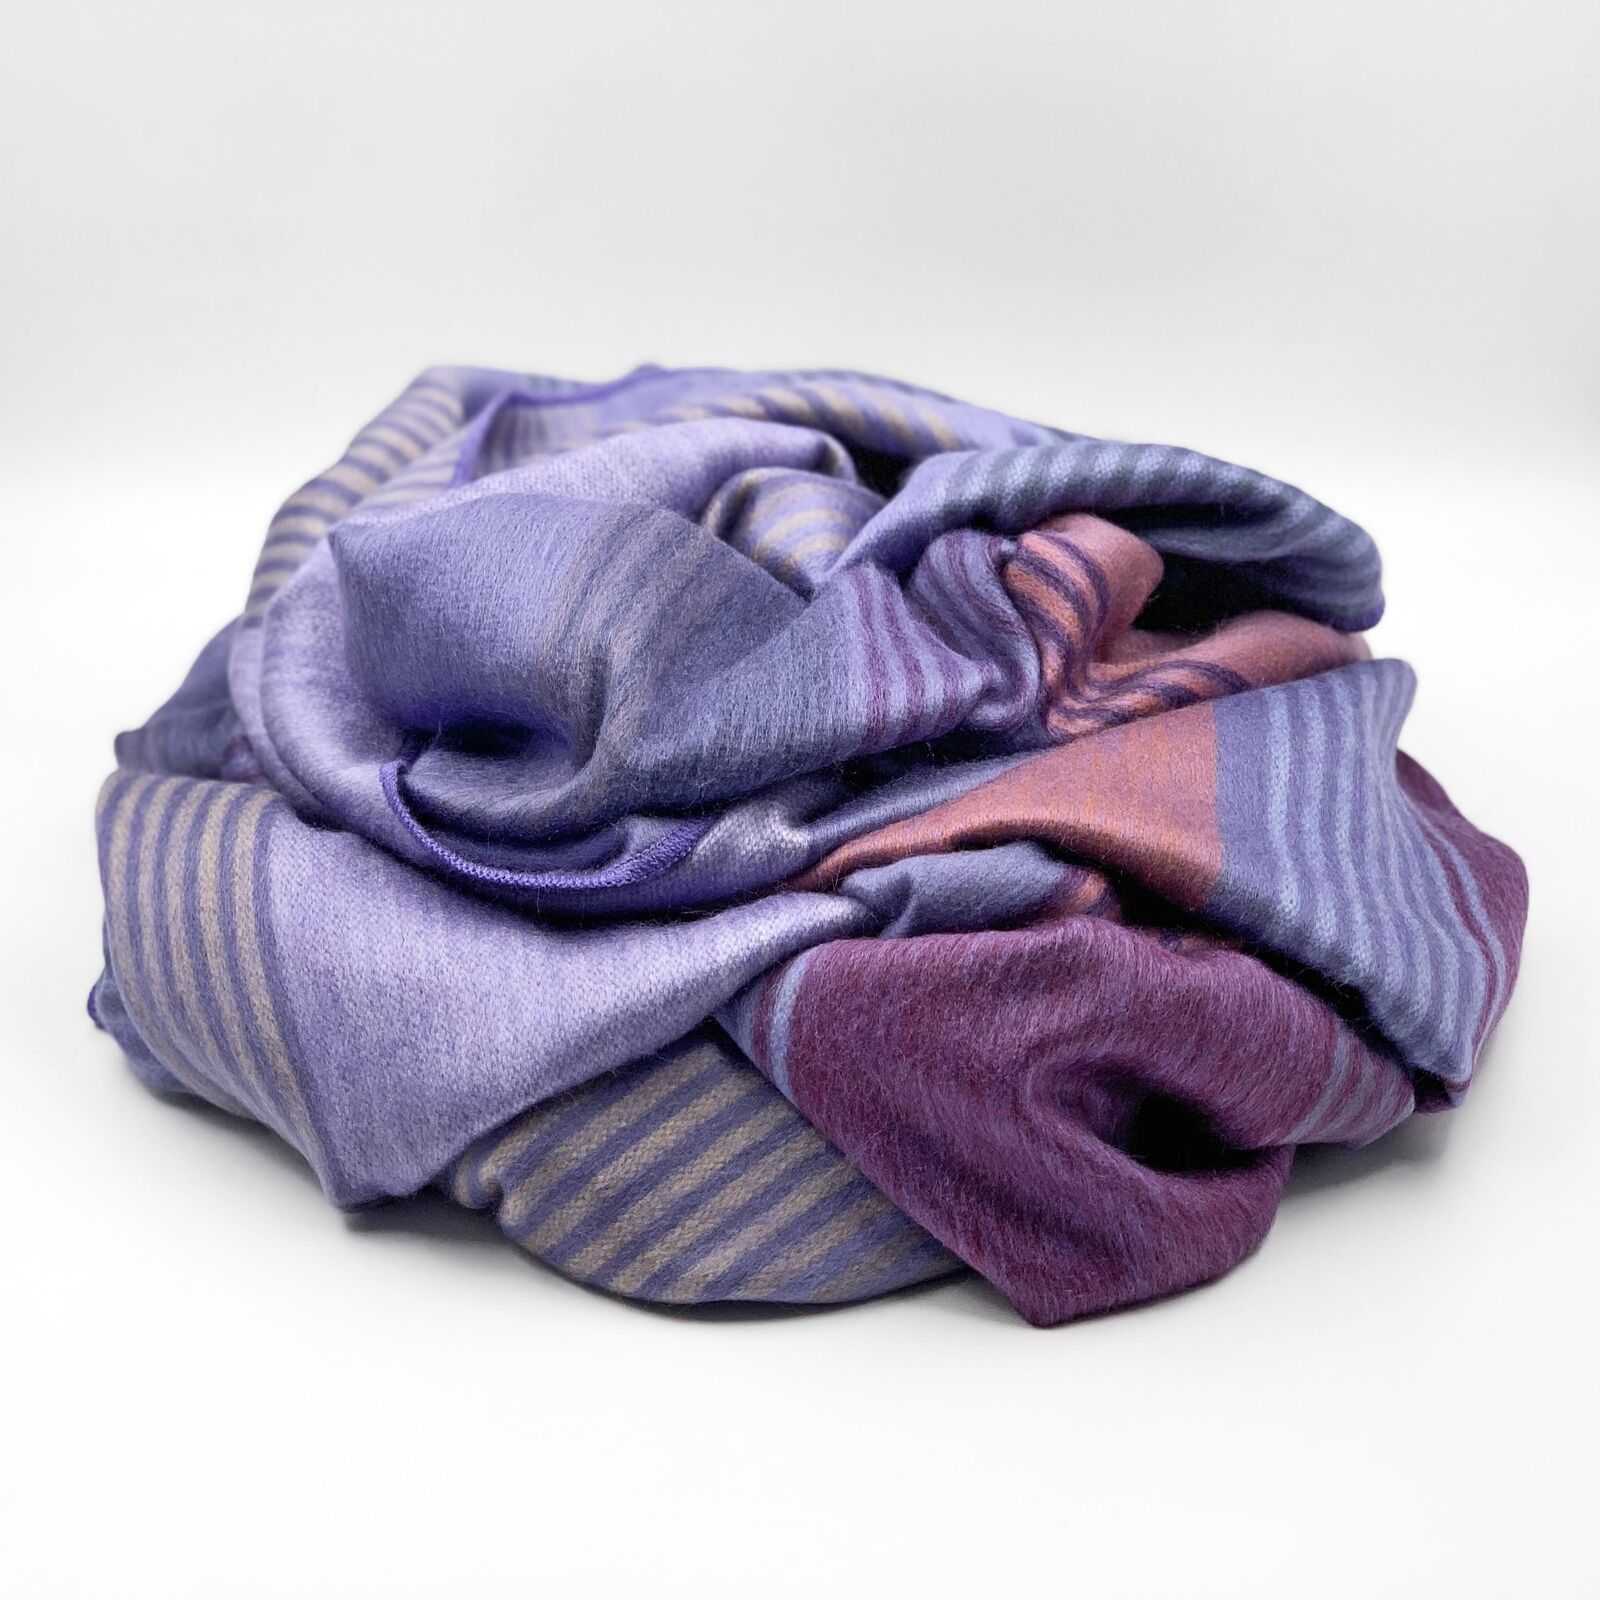 Ochoa - Baby Alpaca Wool Throw Blanket / Sofa Cover - Queen 90" x 70" - multi colored stripes pattern